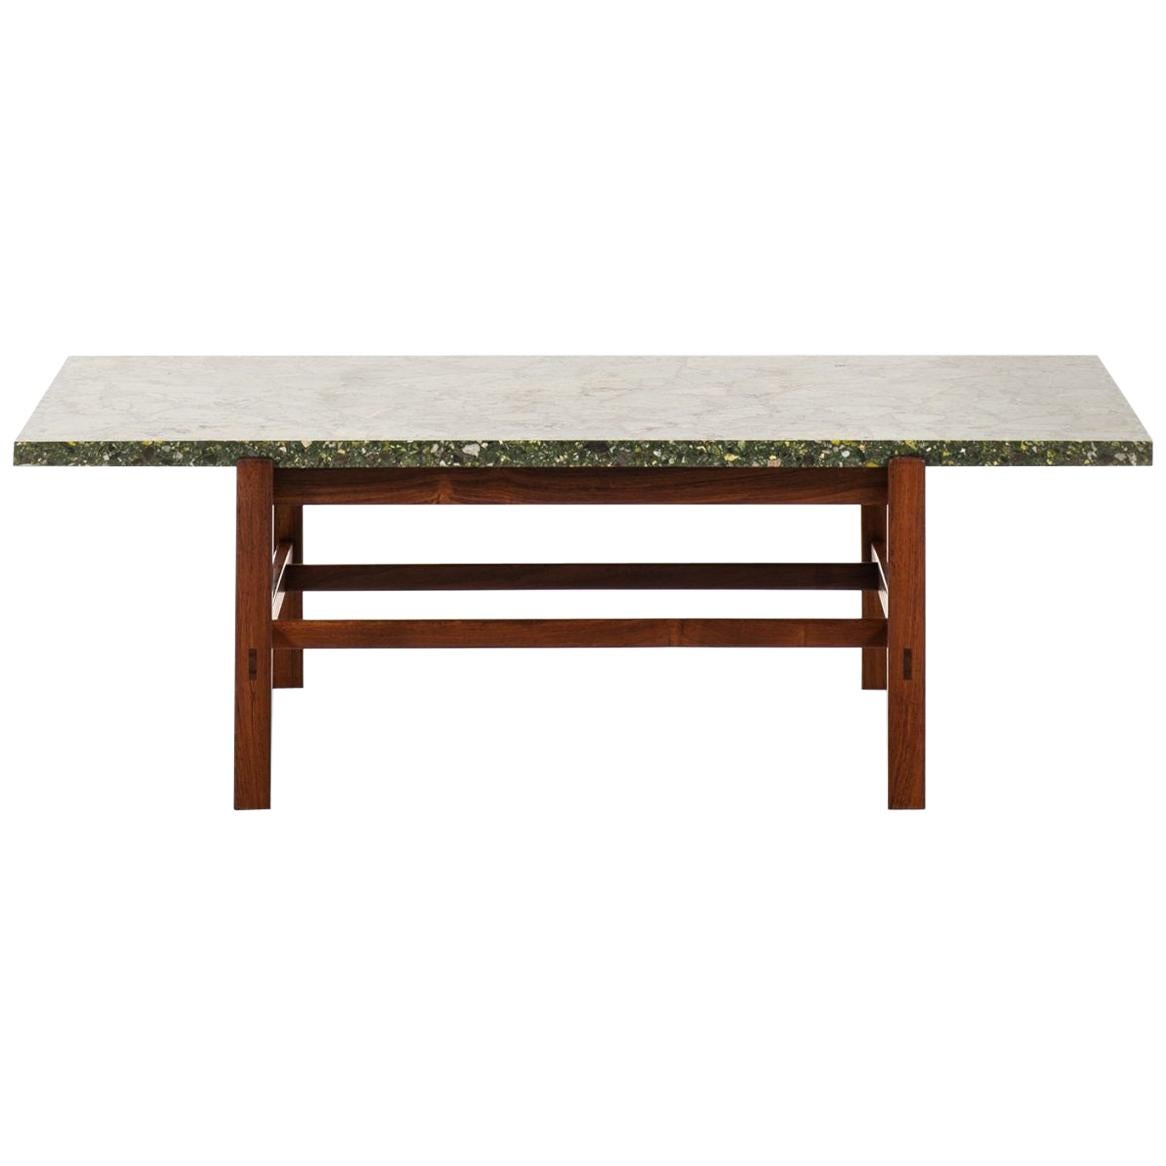 Inge Davidsson Side Table / Coffee Table by Cabinetmaker Ernst Johansson For Sale